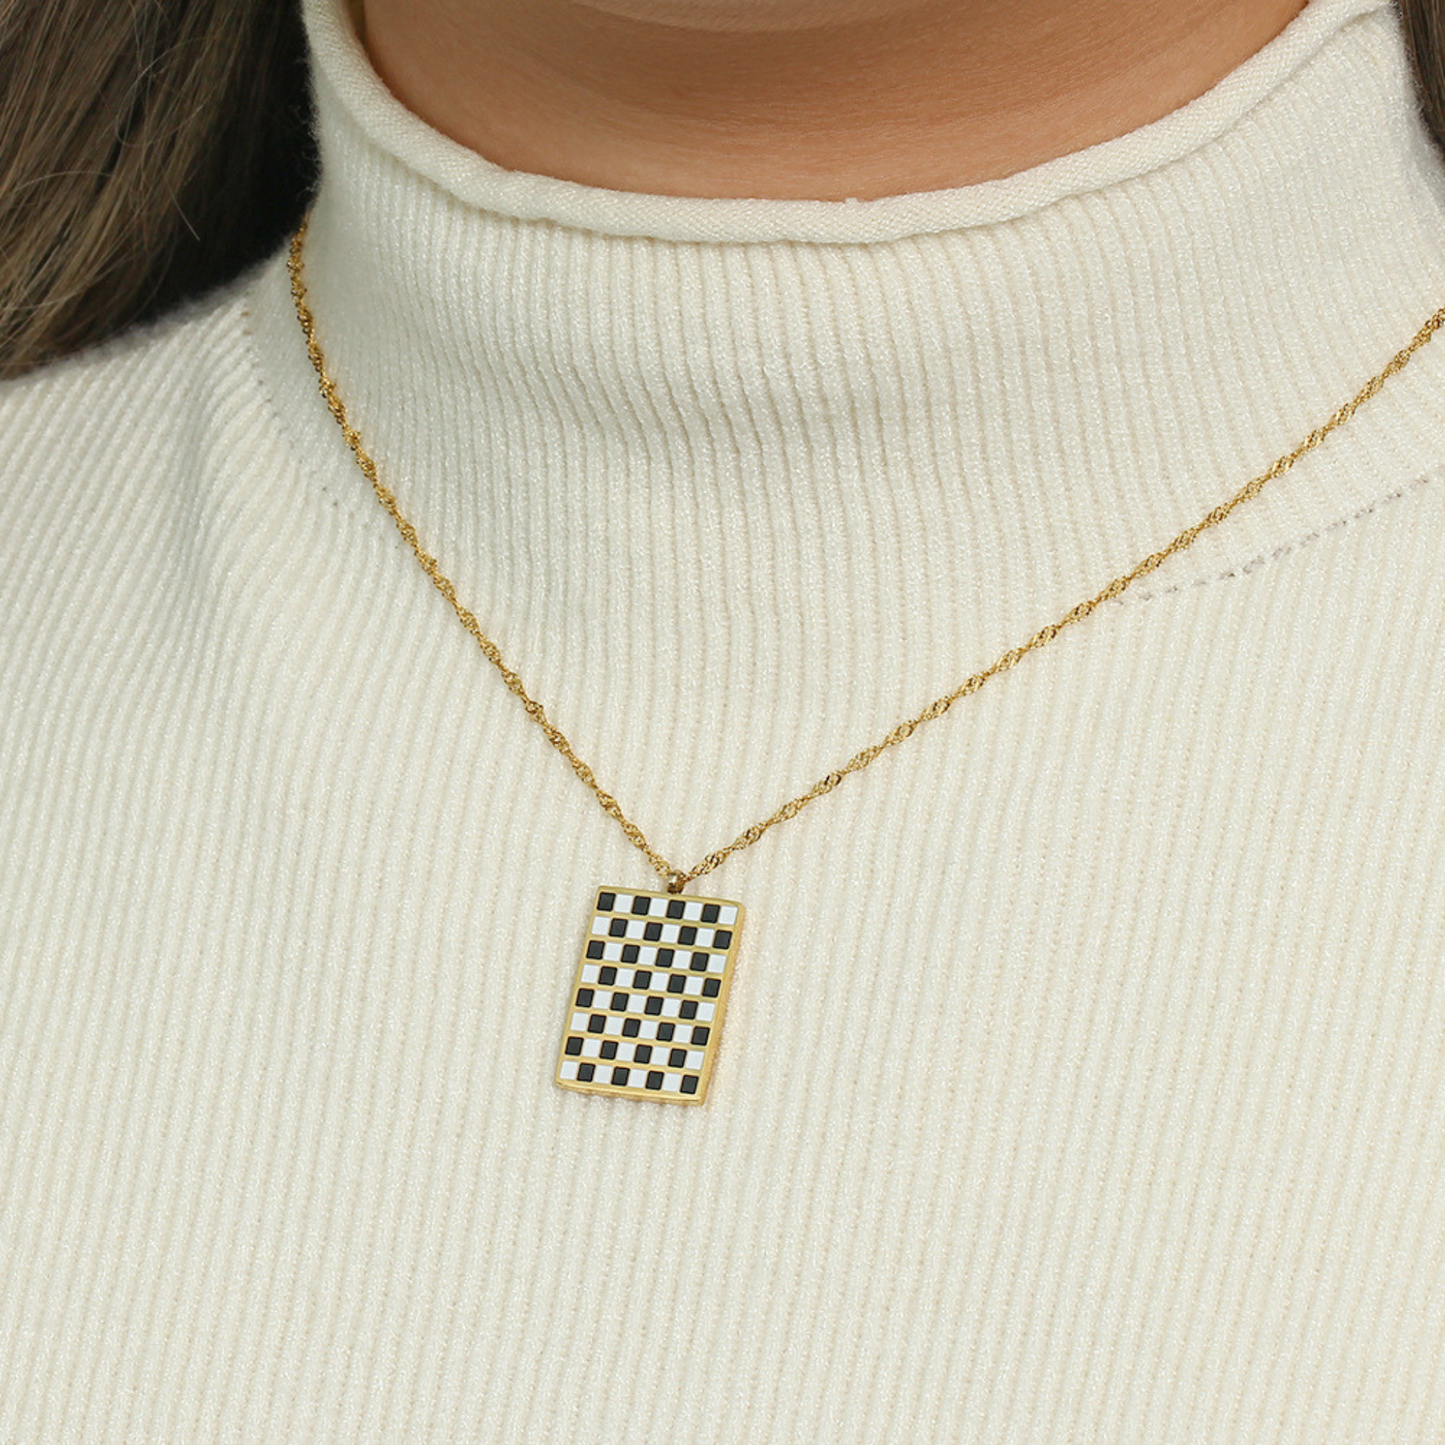 Minimalist Black and White Checkered Pendant Necklace